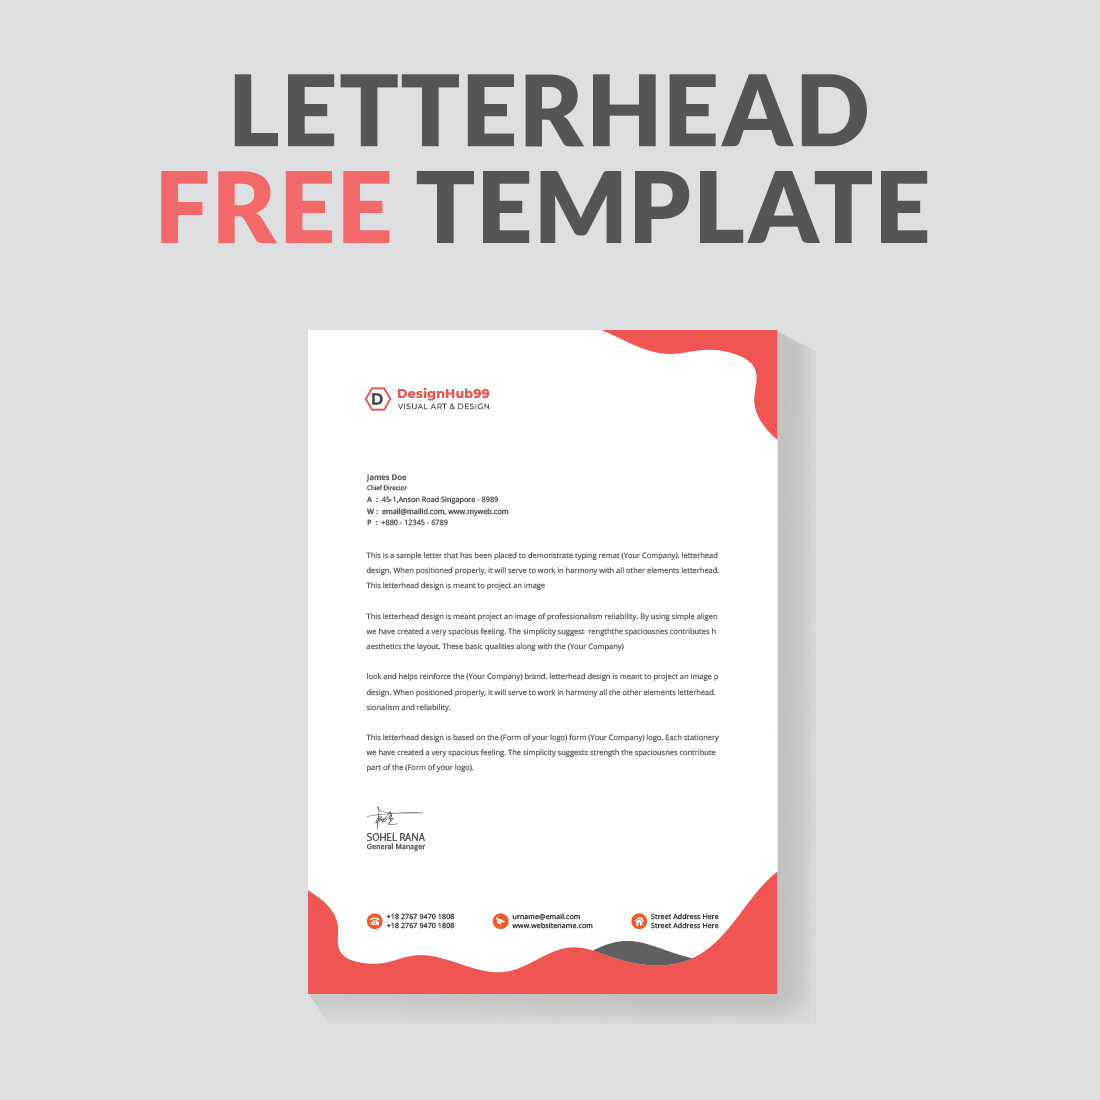 Company letterhead template cover image.